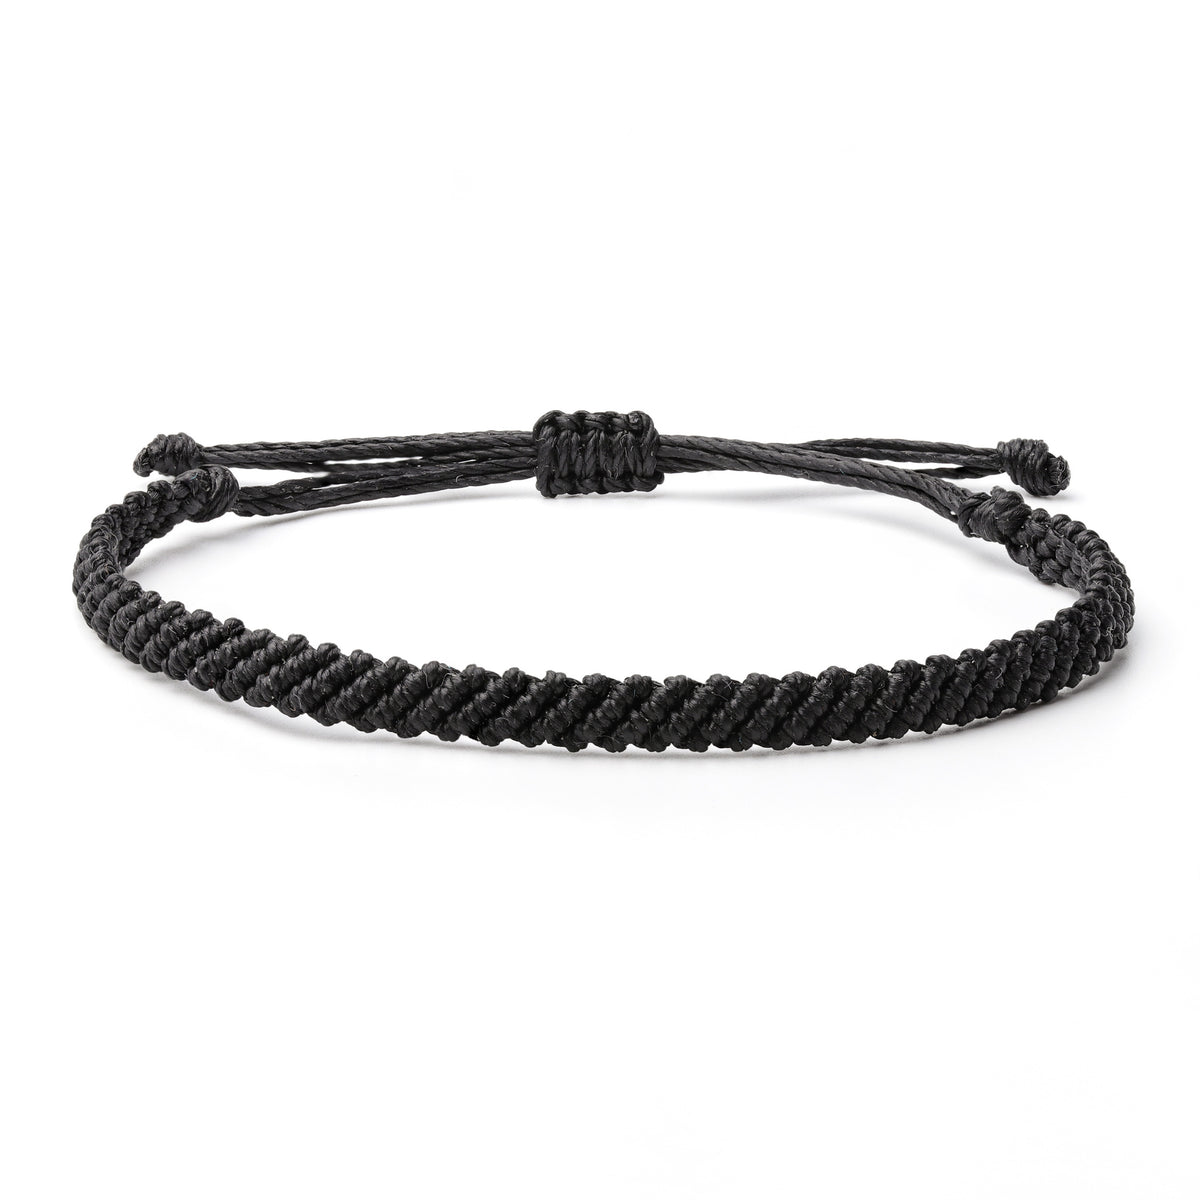 Black string bracelet men adjustable cord waterproof jewelry